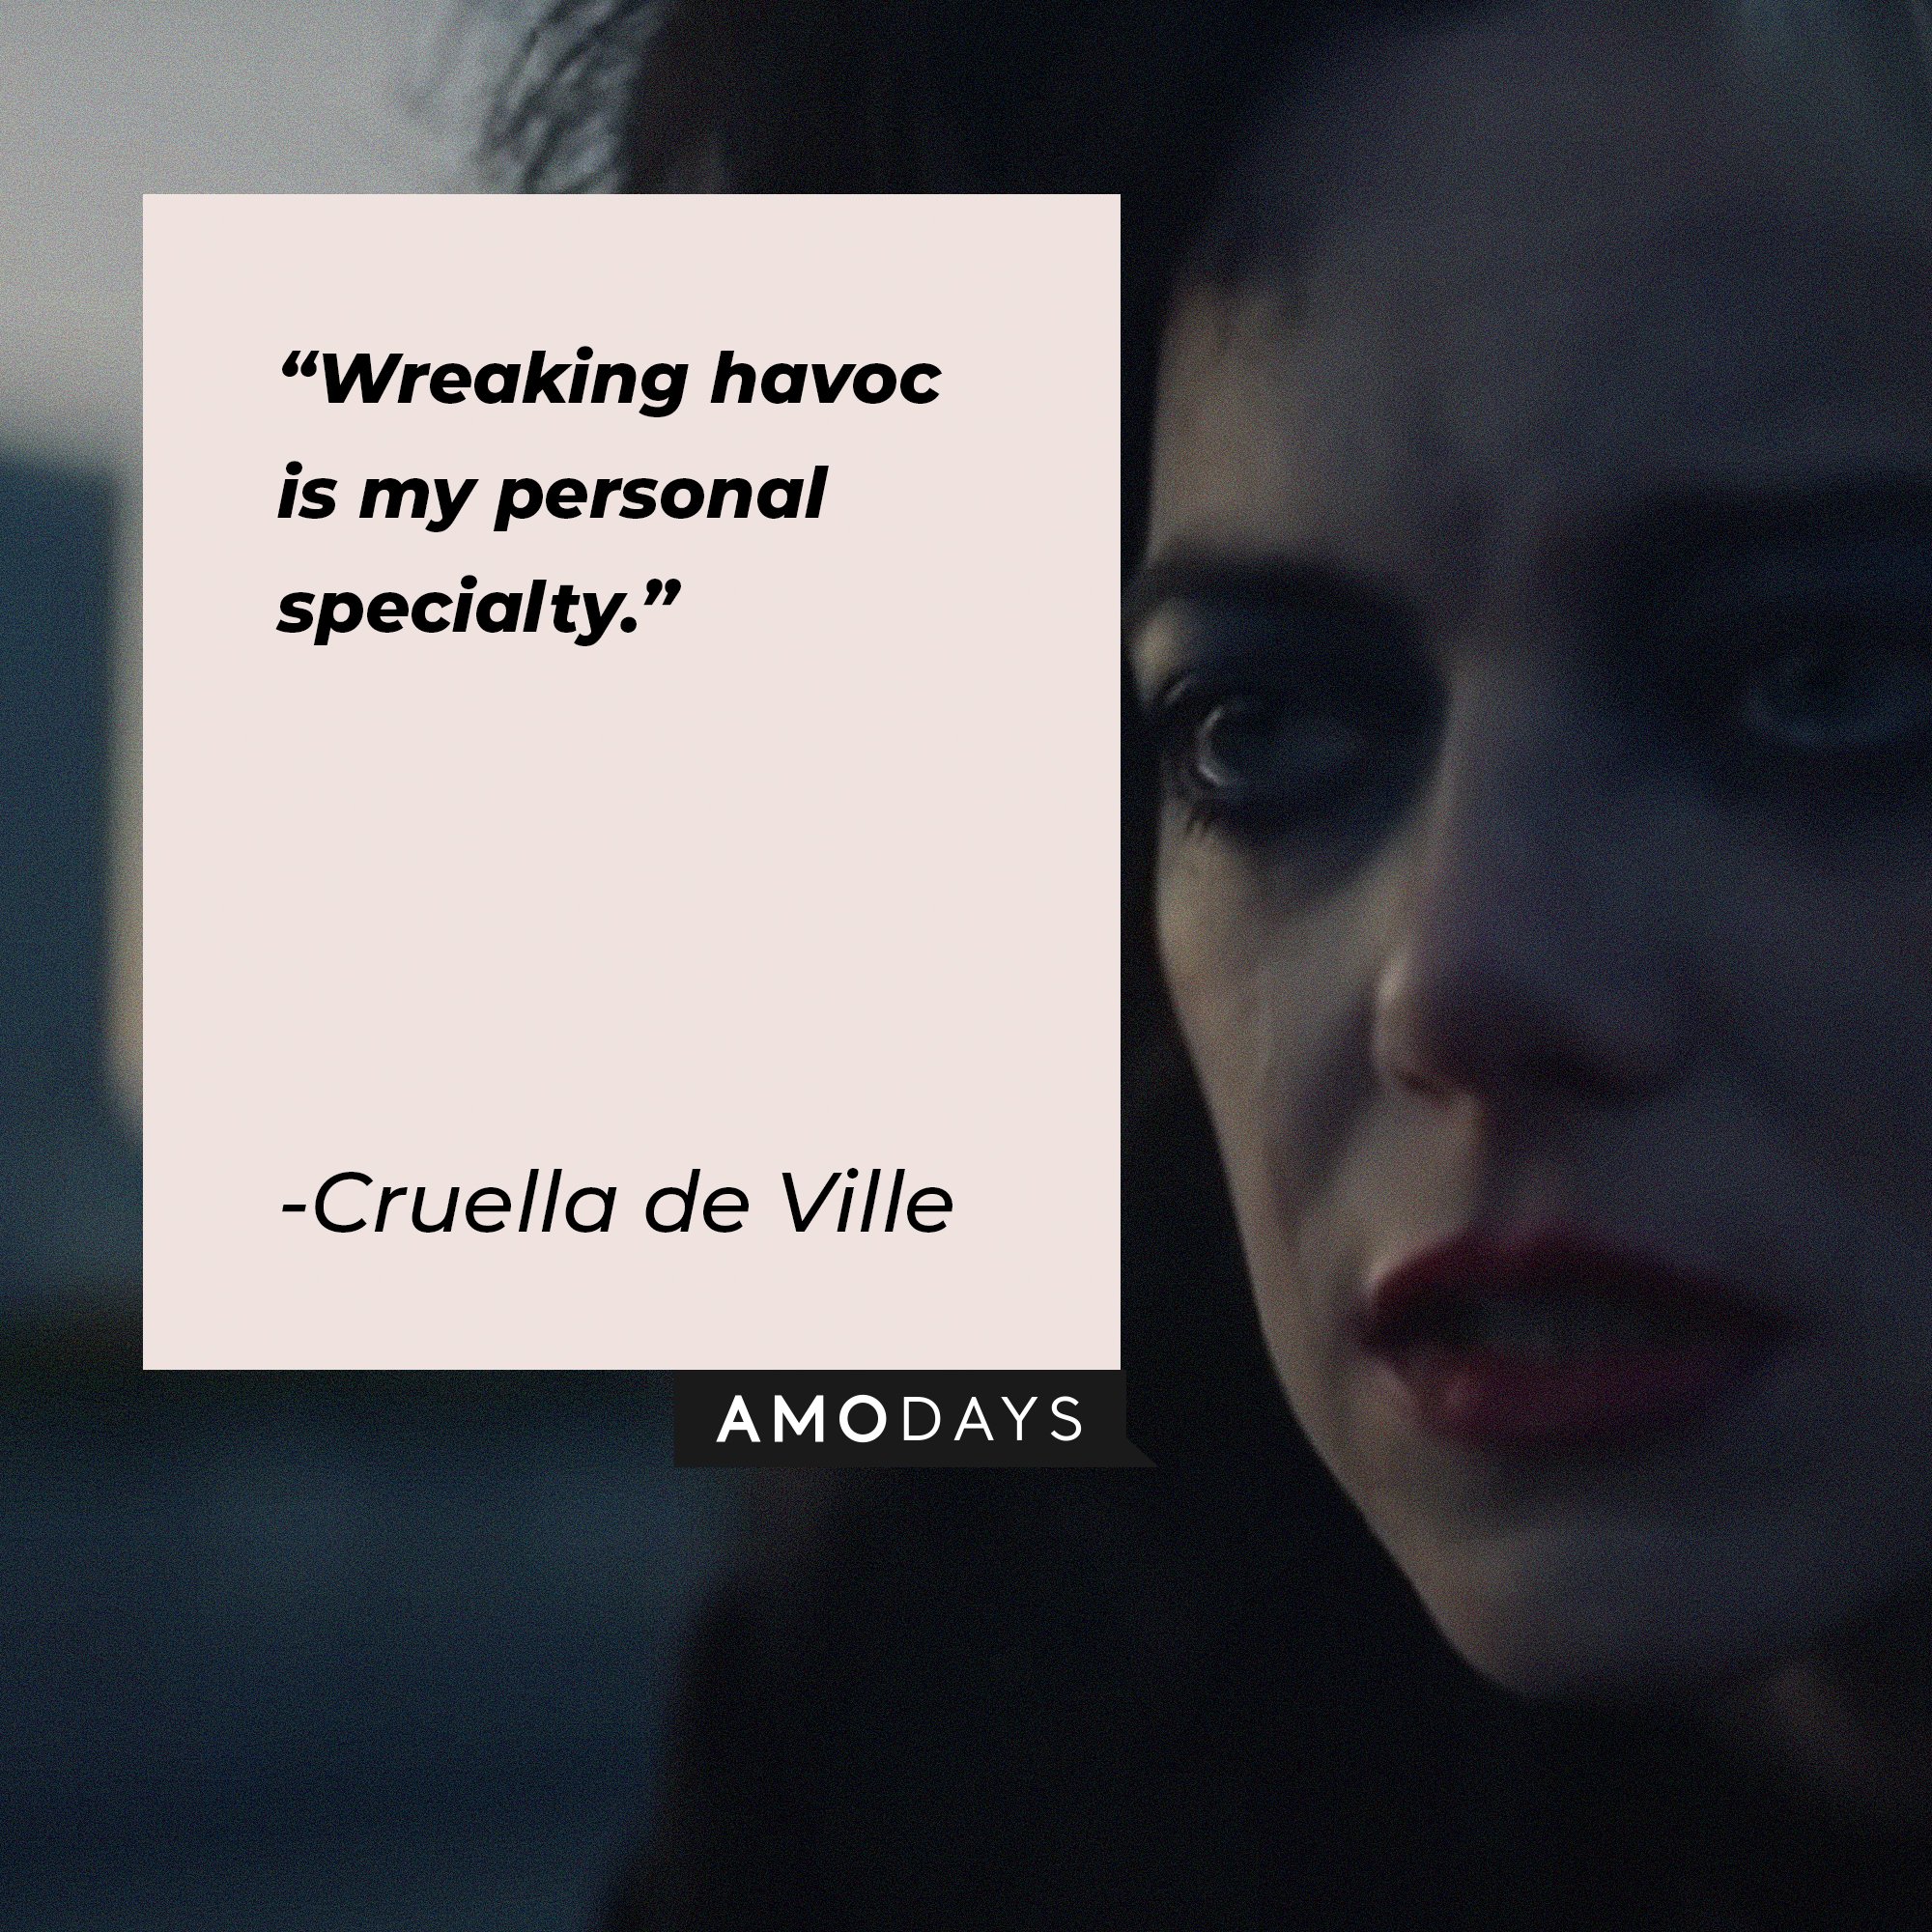 Cruella de Ville’s quote: “Wreaking havoc is my personal specialty.” | Image: AmoDays